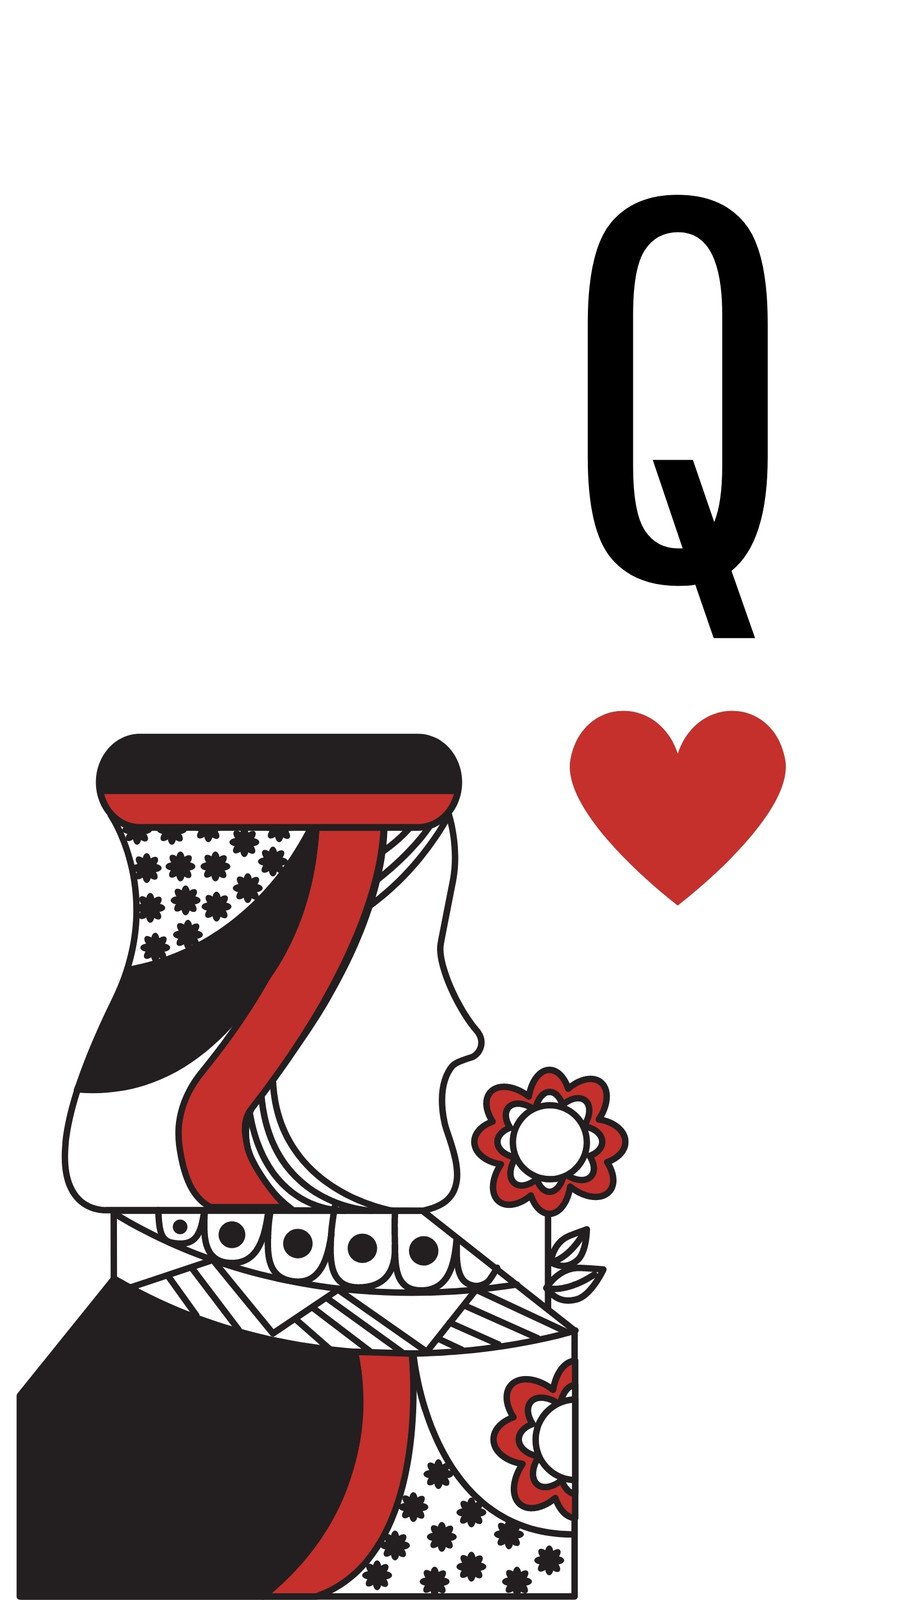 Queen Heart Alice Wonderland Bloody Pattern Stock Vector Royalty Free  1585064026  Shutterstock